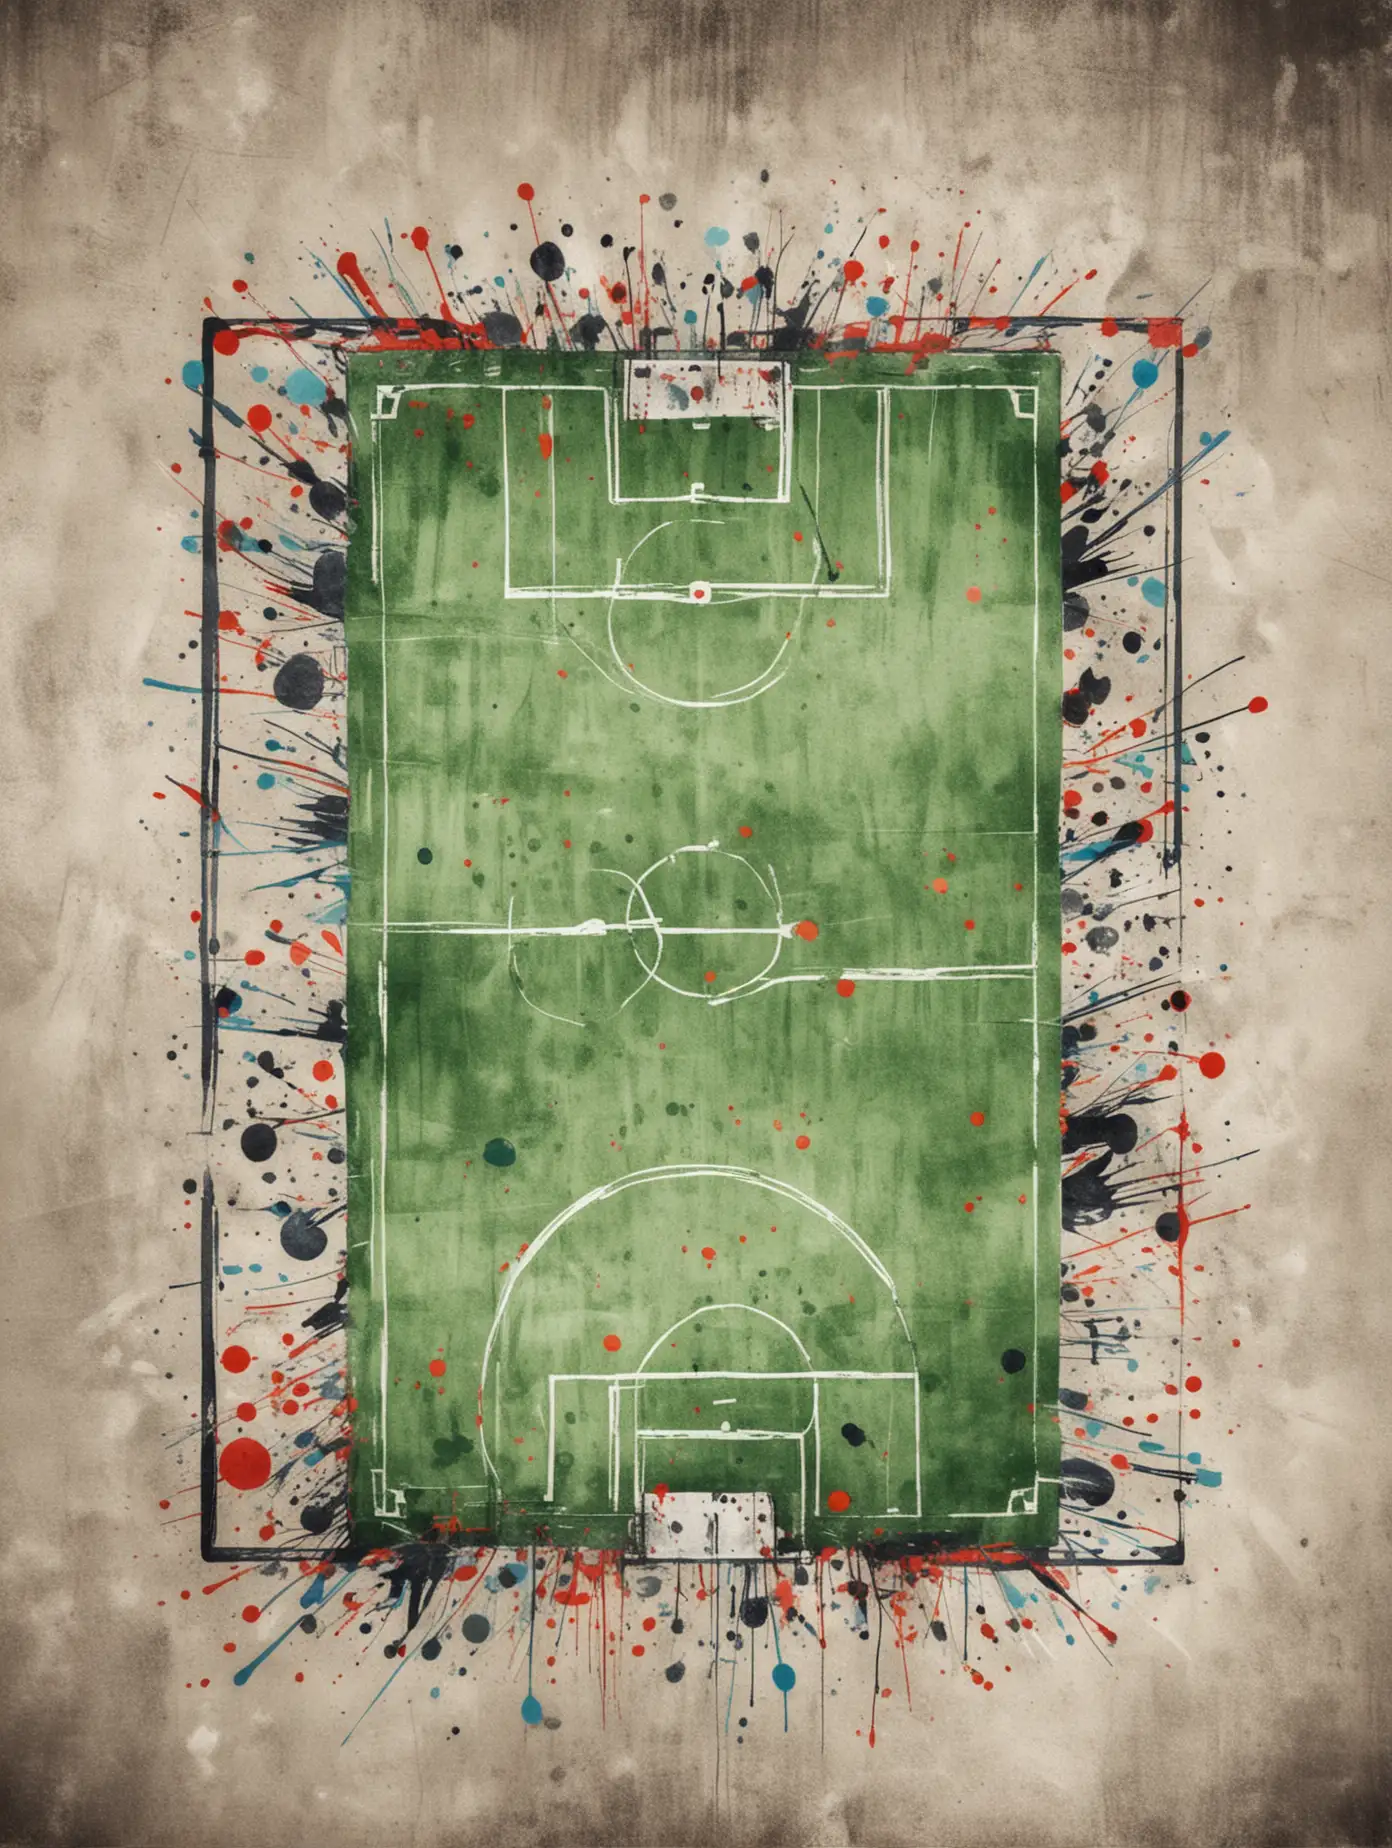 Modern Art Graffiti Football Field with Minimalistic Watercolor Style